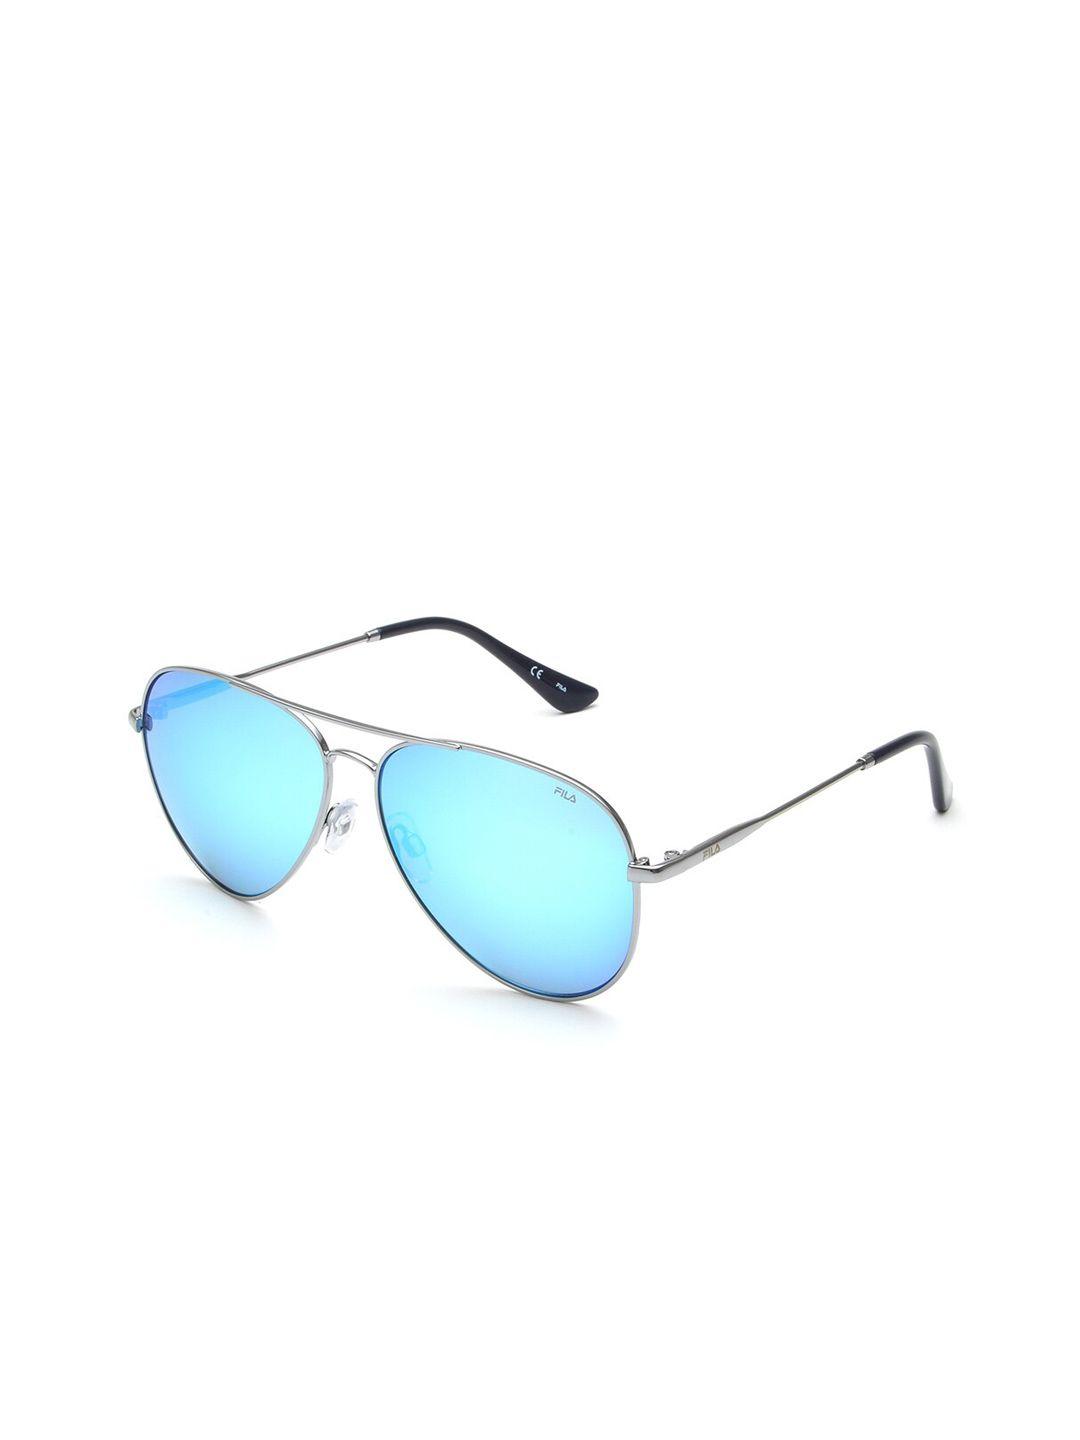 fila men blue lens & silver-toned aviator sunglasses with uv protected lens